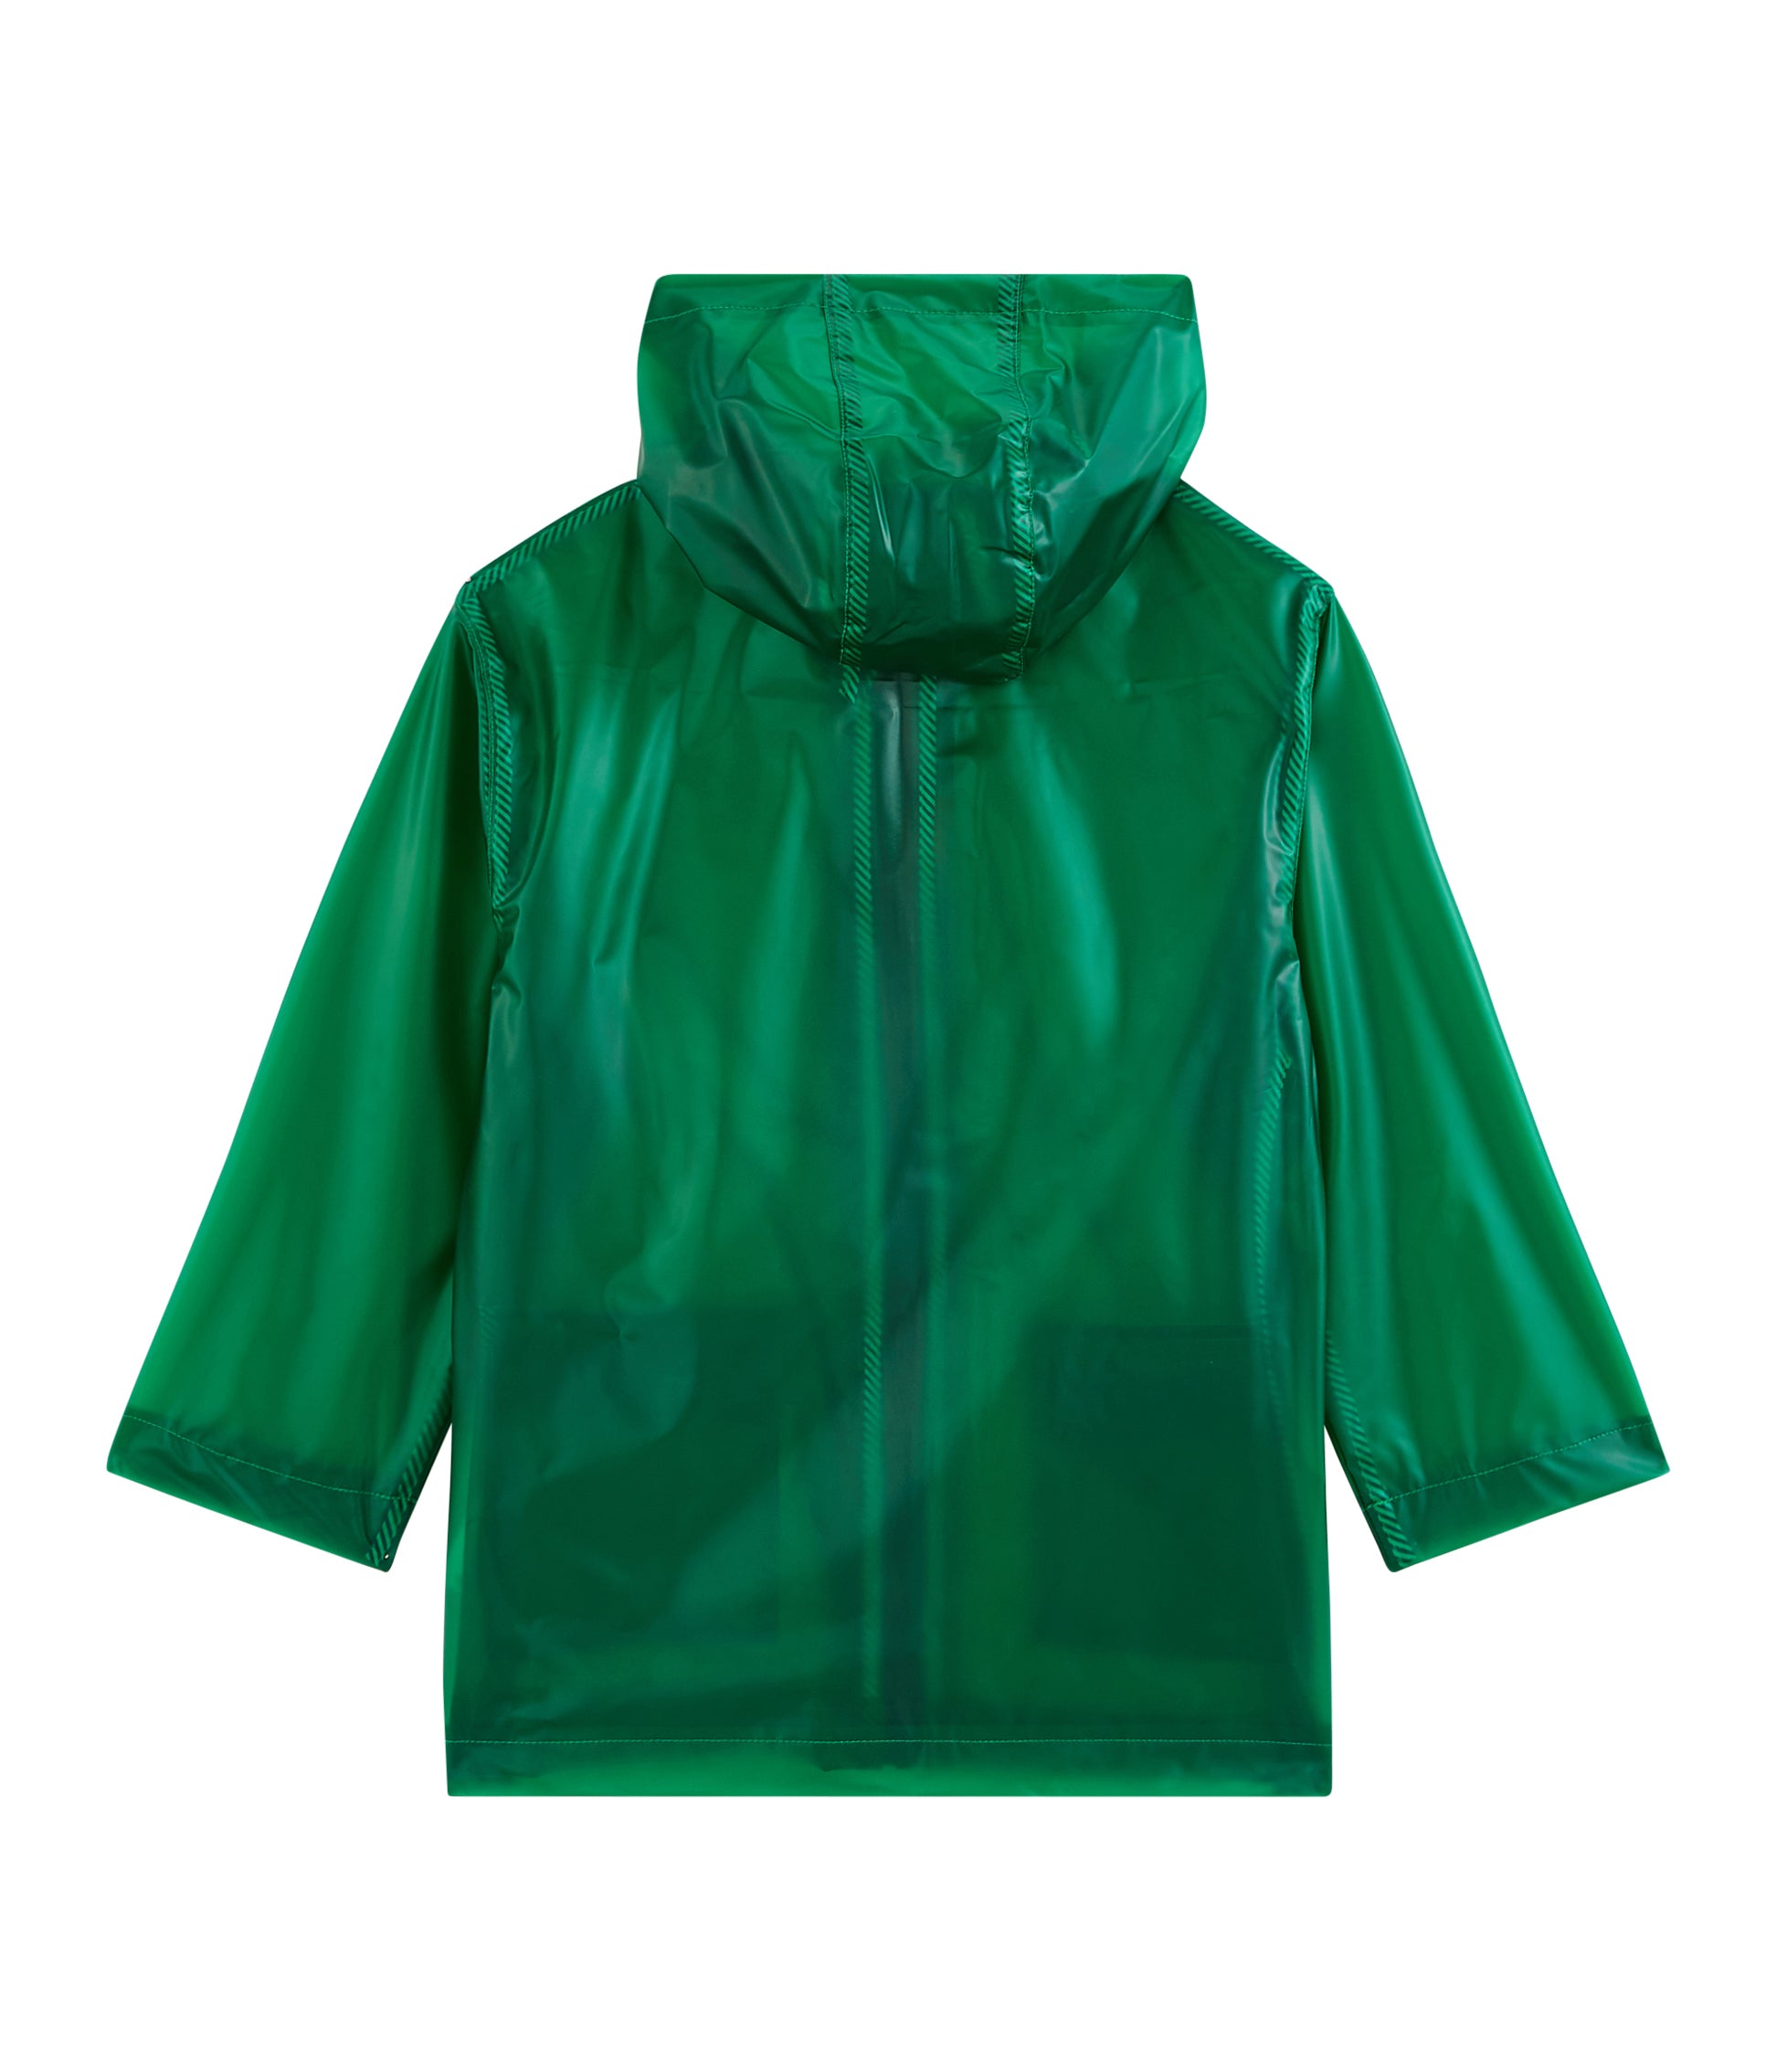 Boys Green Hooded Raincoat